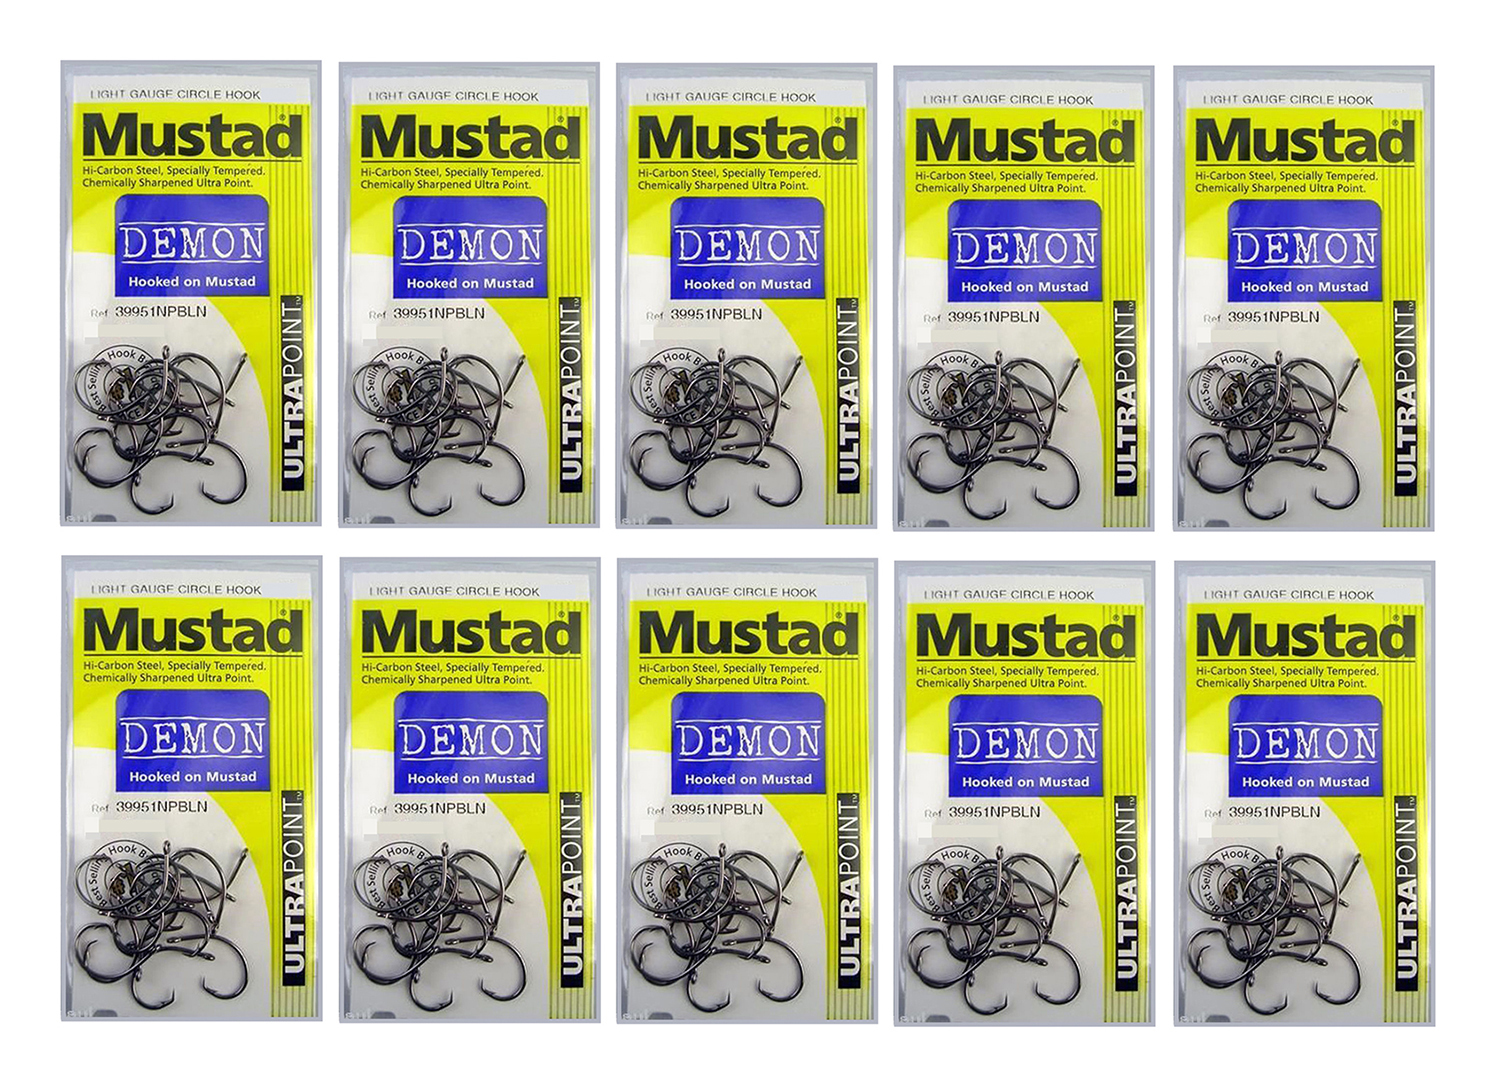 Mustad Demon Size 1 - 39951npbln - Bulk 10 Pce Value Pack